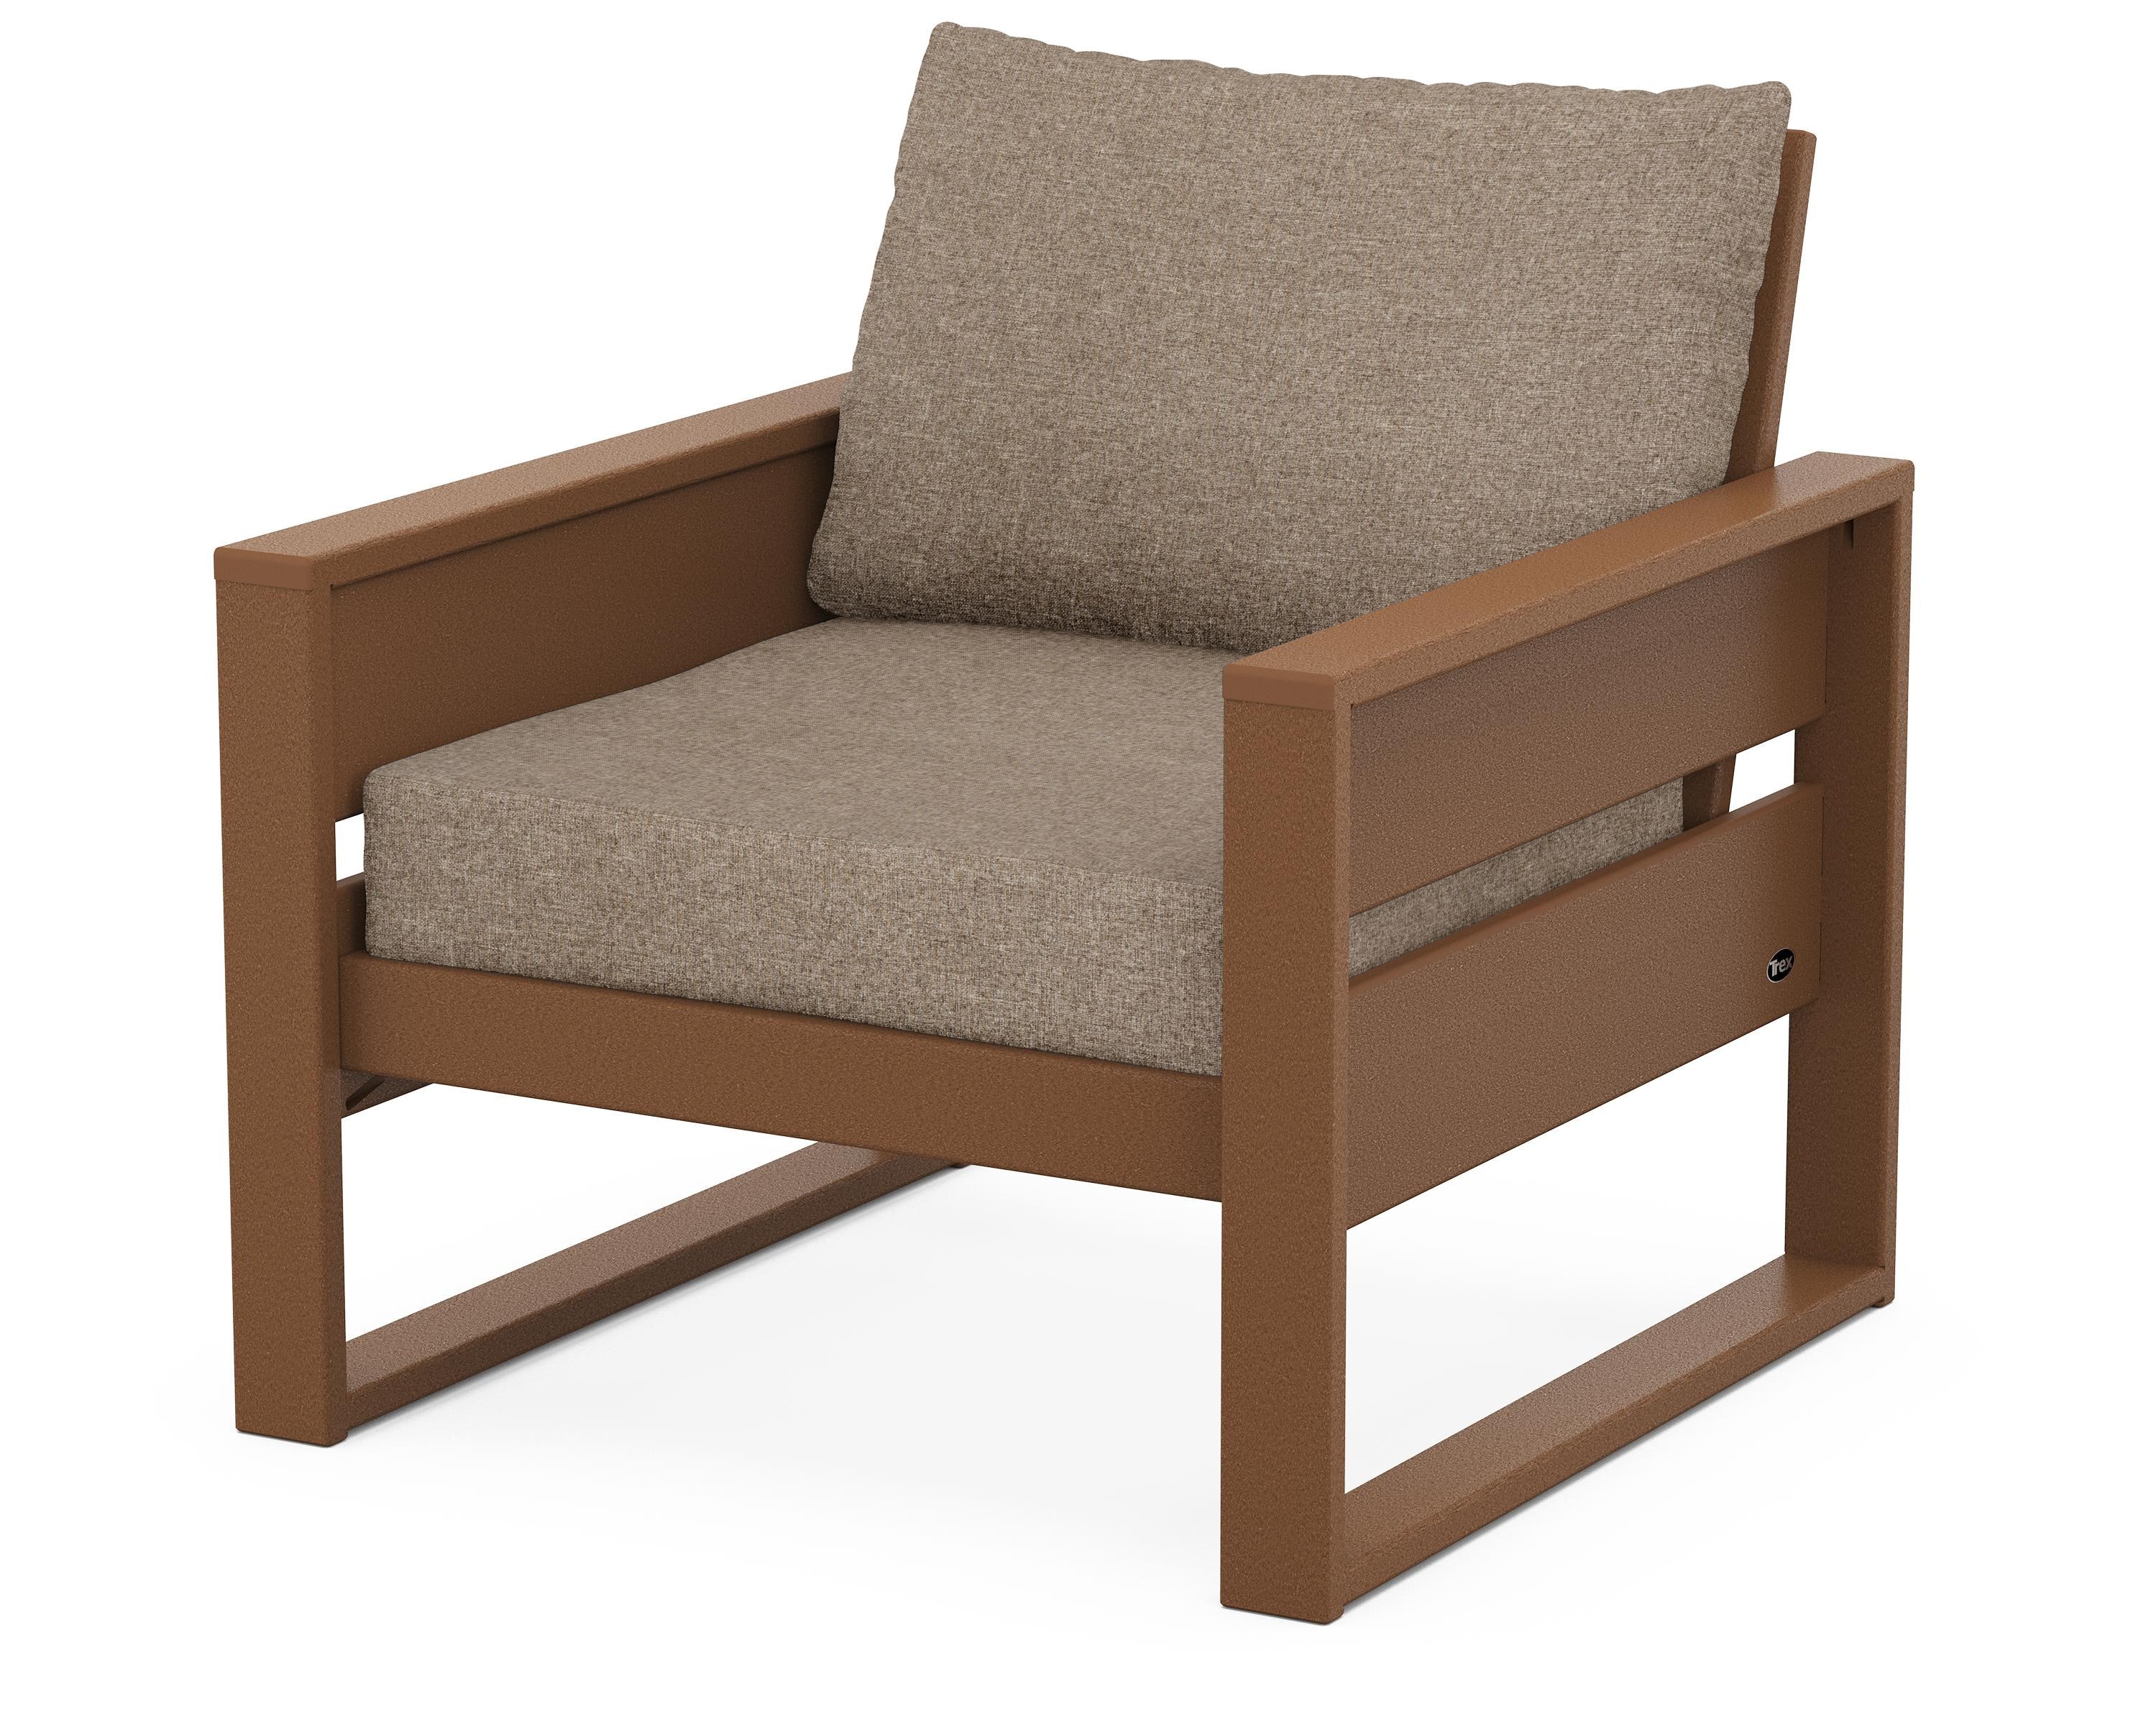 Trex Outdoor Furniture Eastport Club Chair